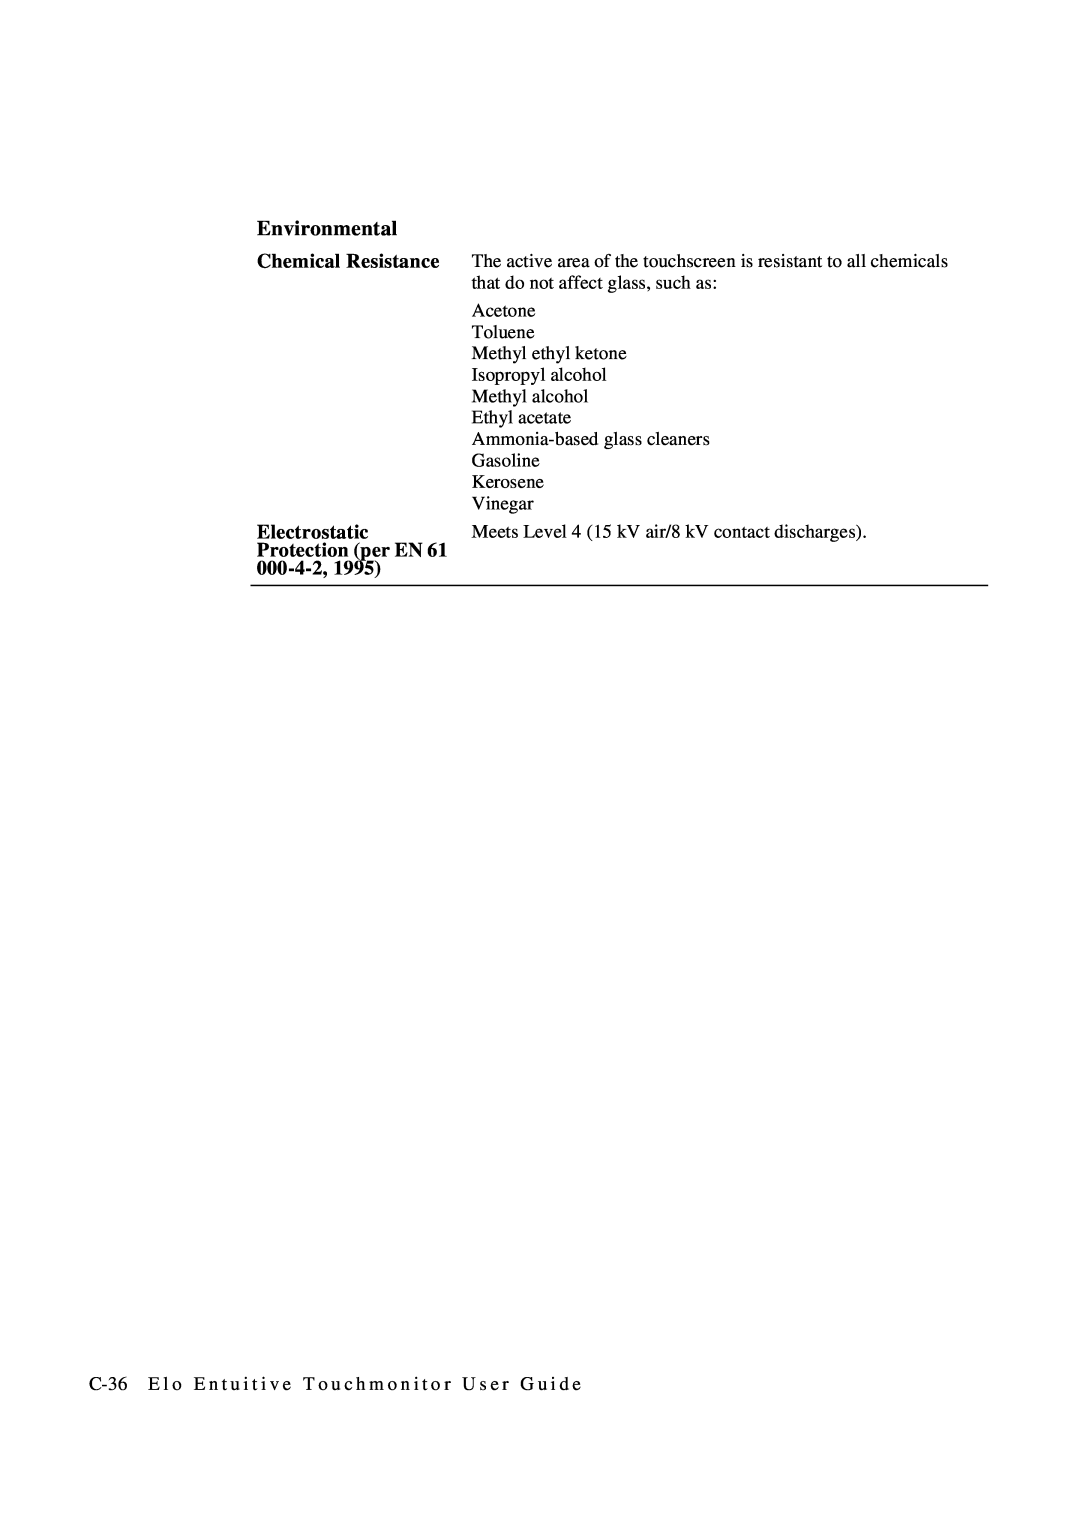 Tyco 1847L Series manual Environmental, Chemical Resistance, Electrostatic, Protection per EN, 000-4-2 